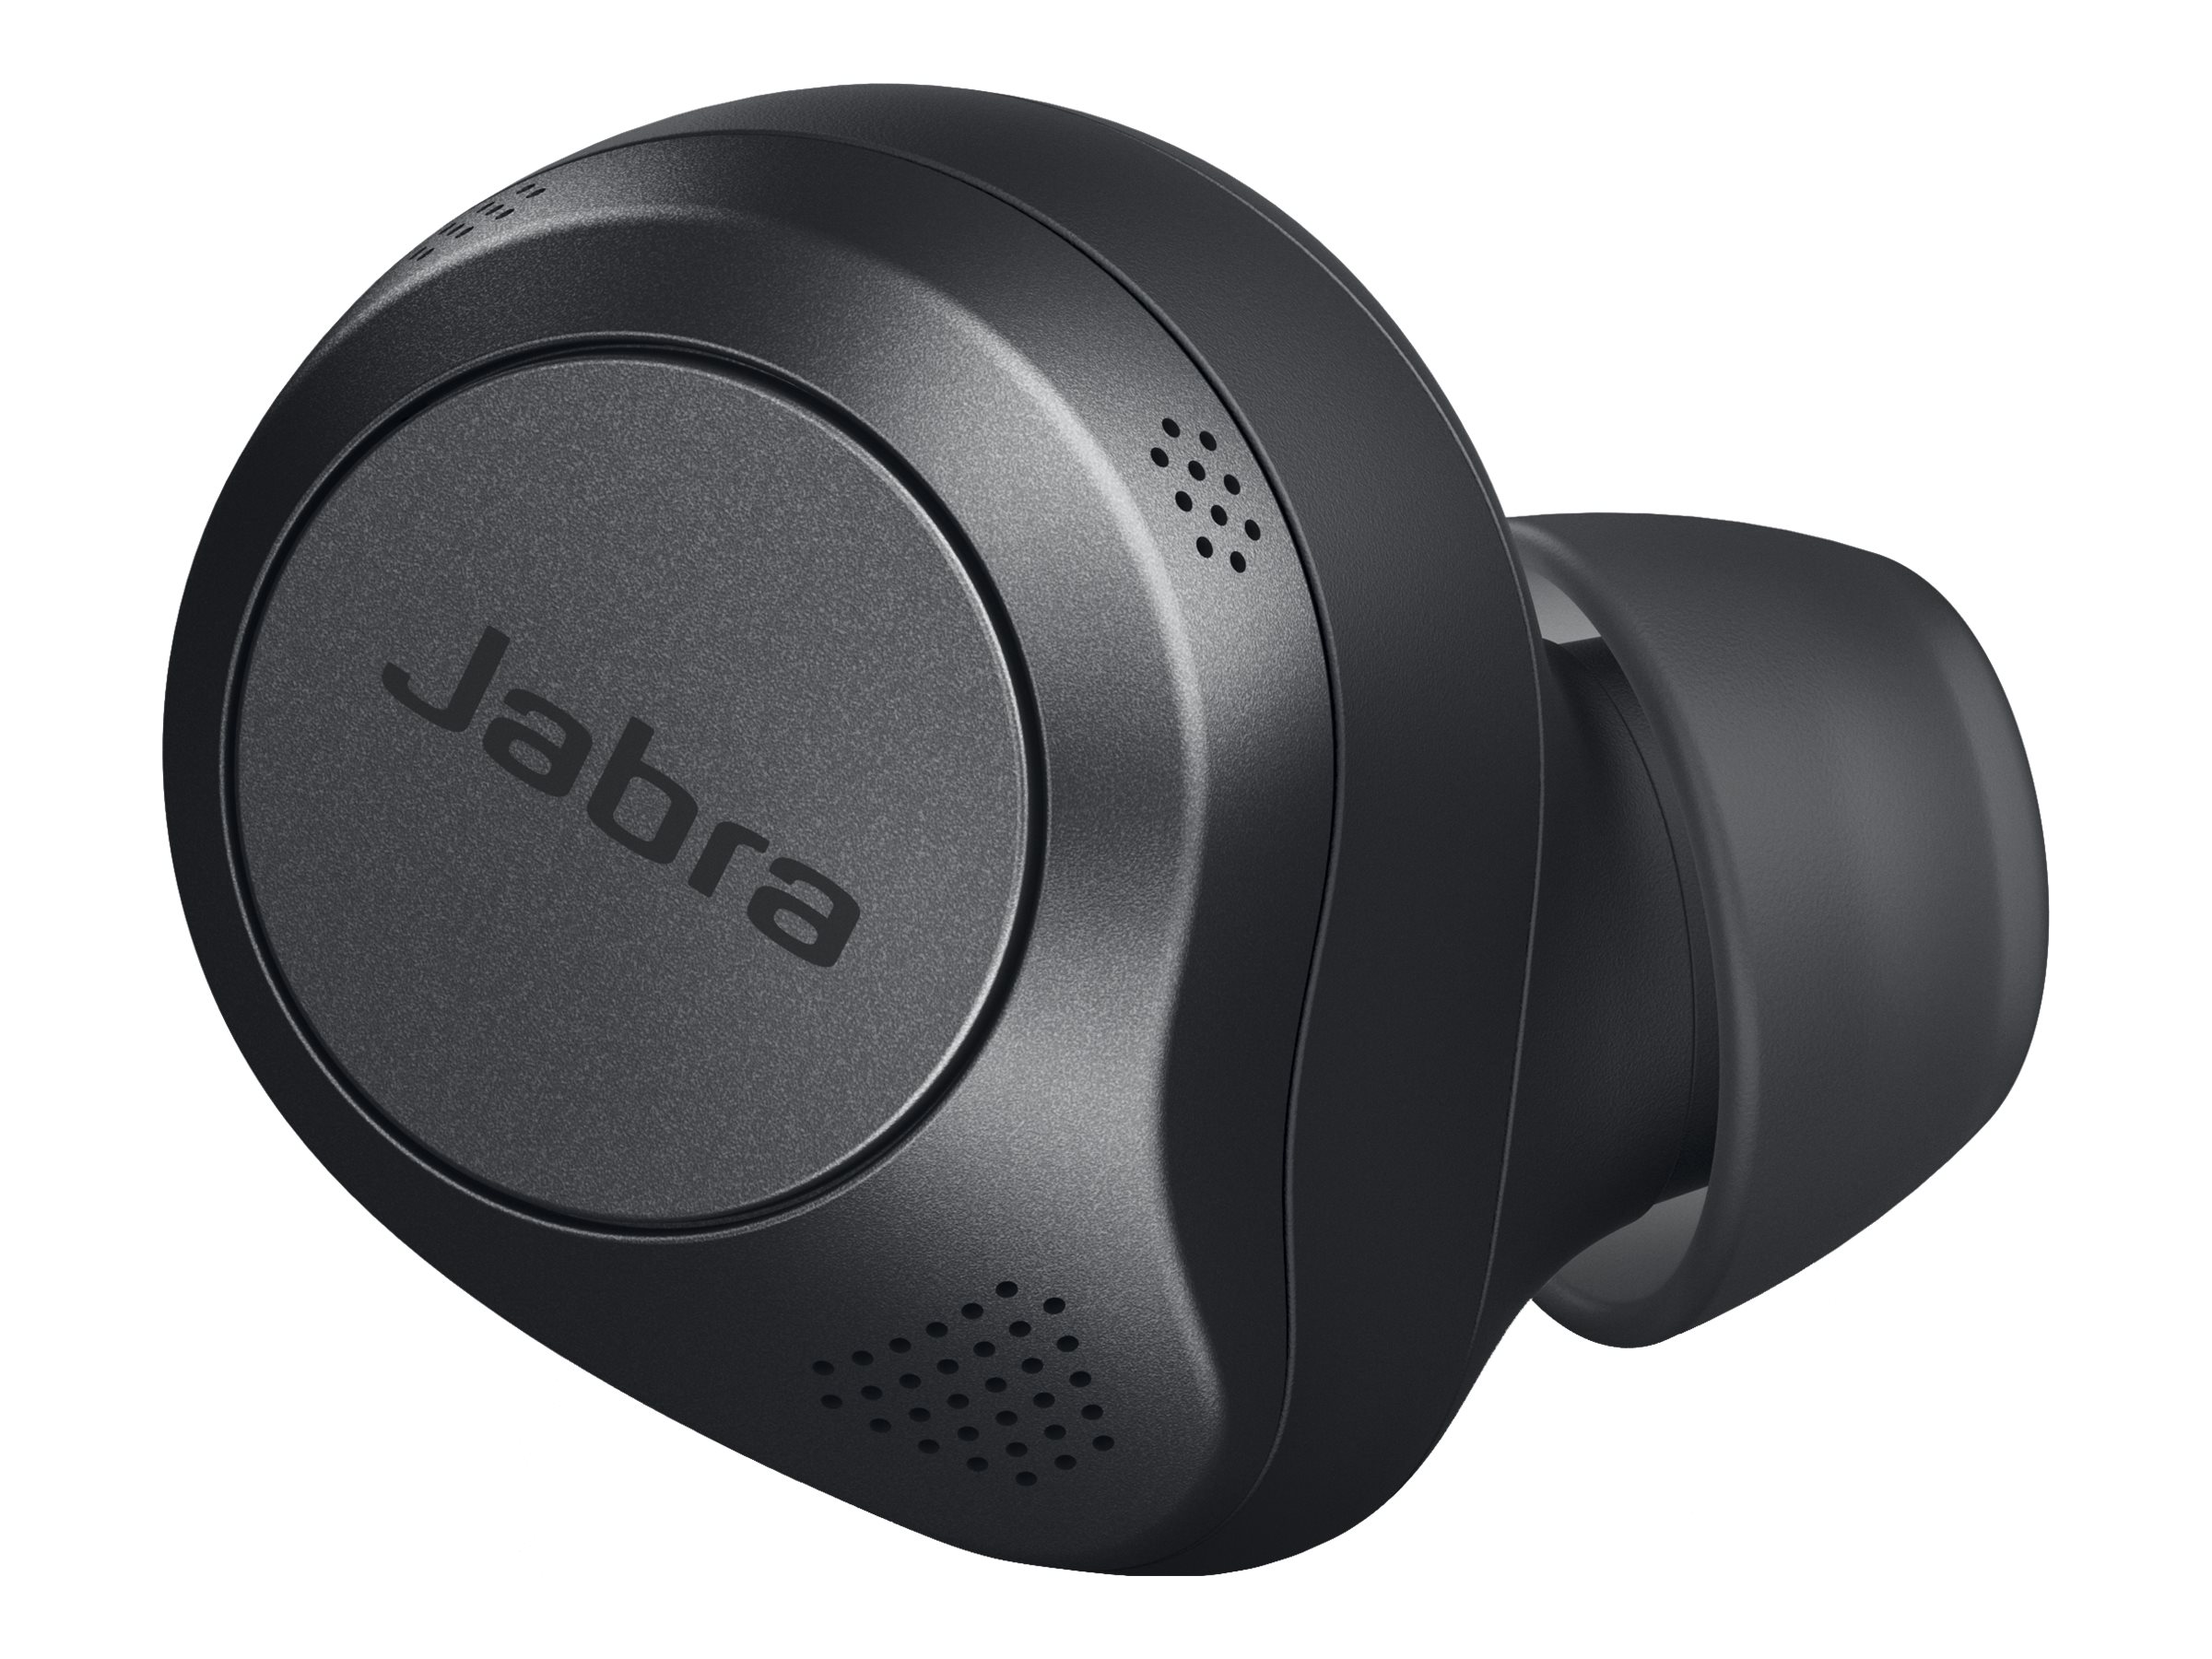 JBL Quantum and Earbuds: Elite differences? vs. Jabra TWS 85t Replacement comparison